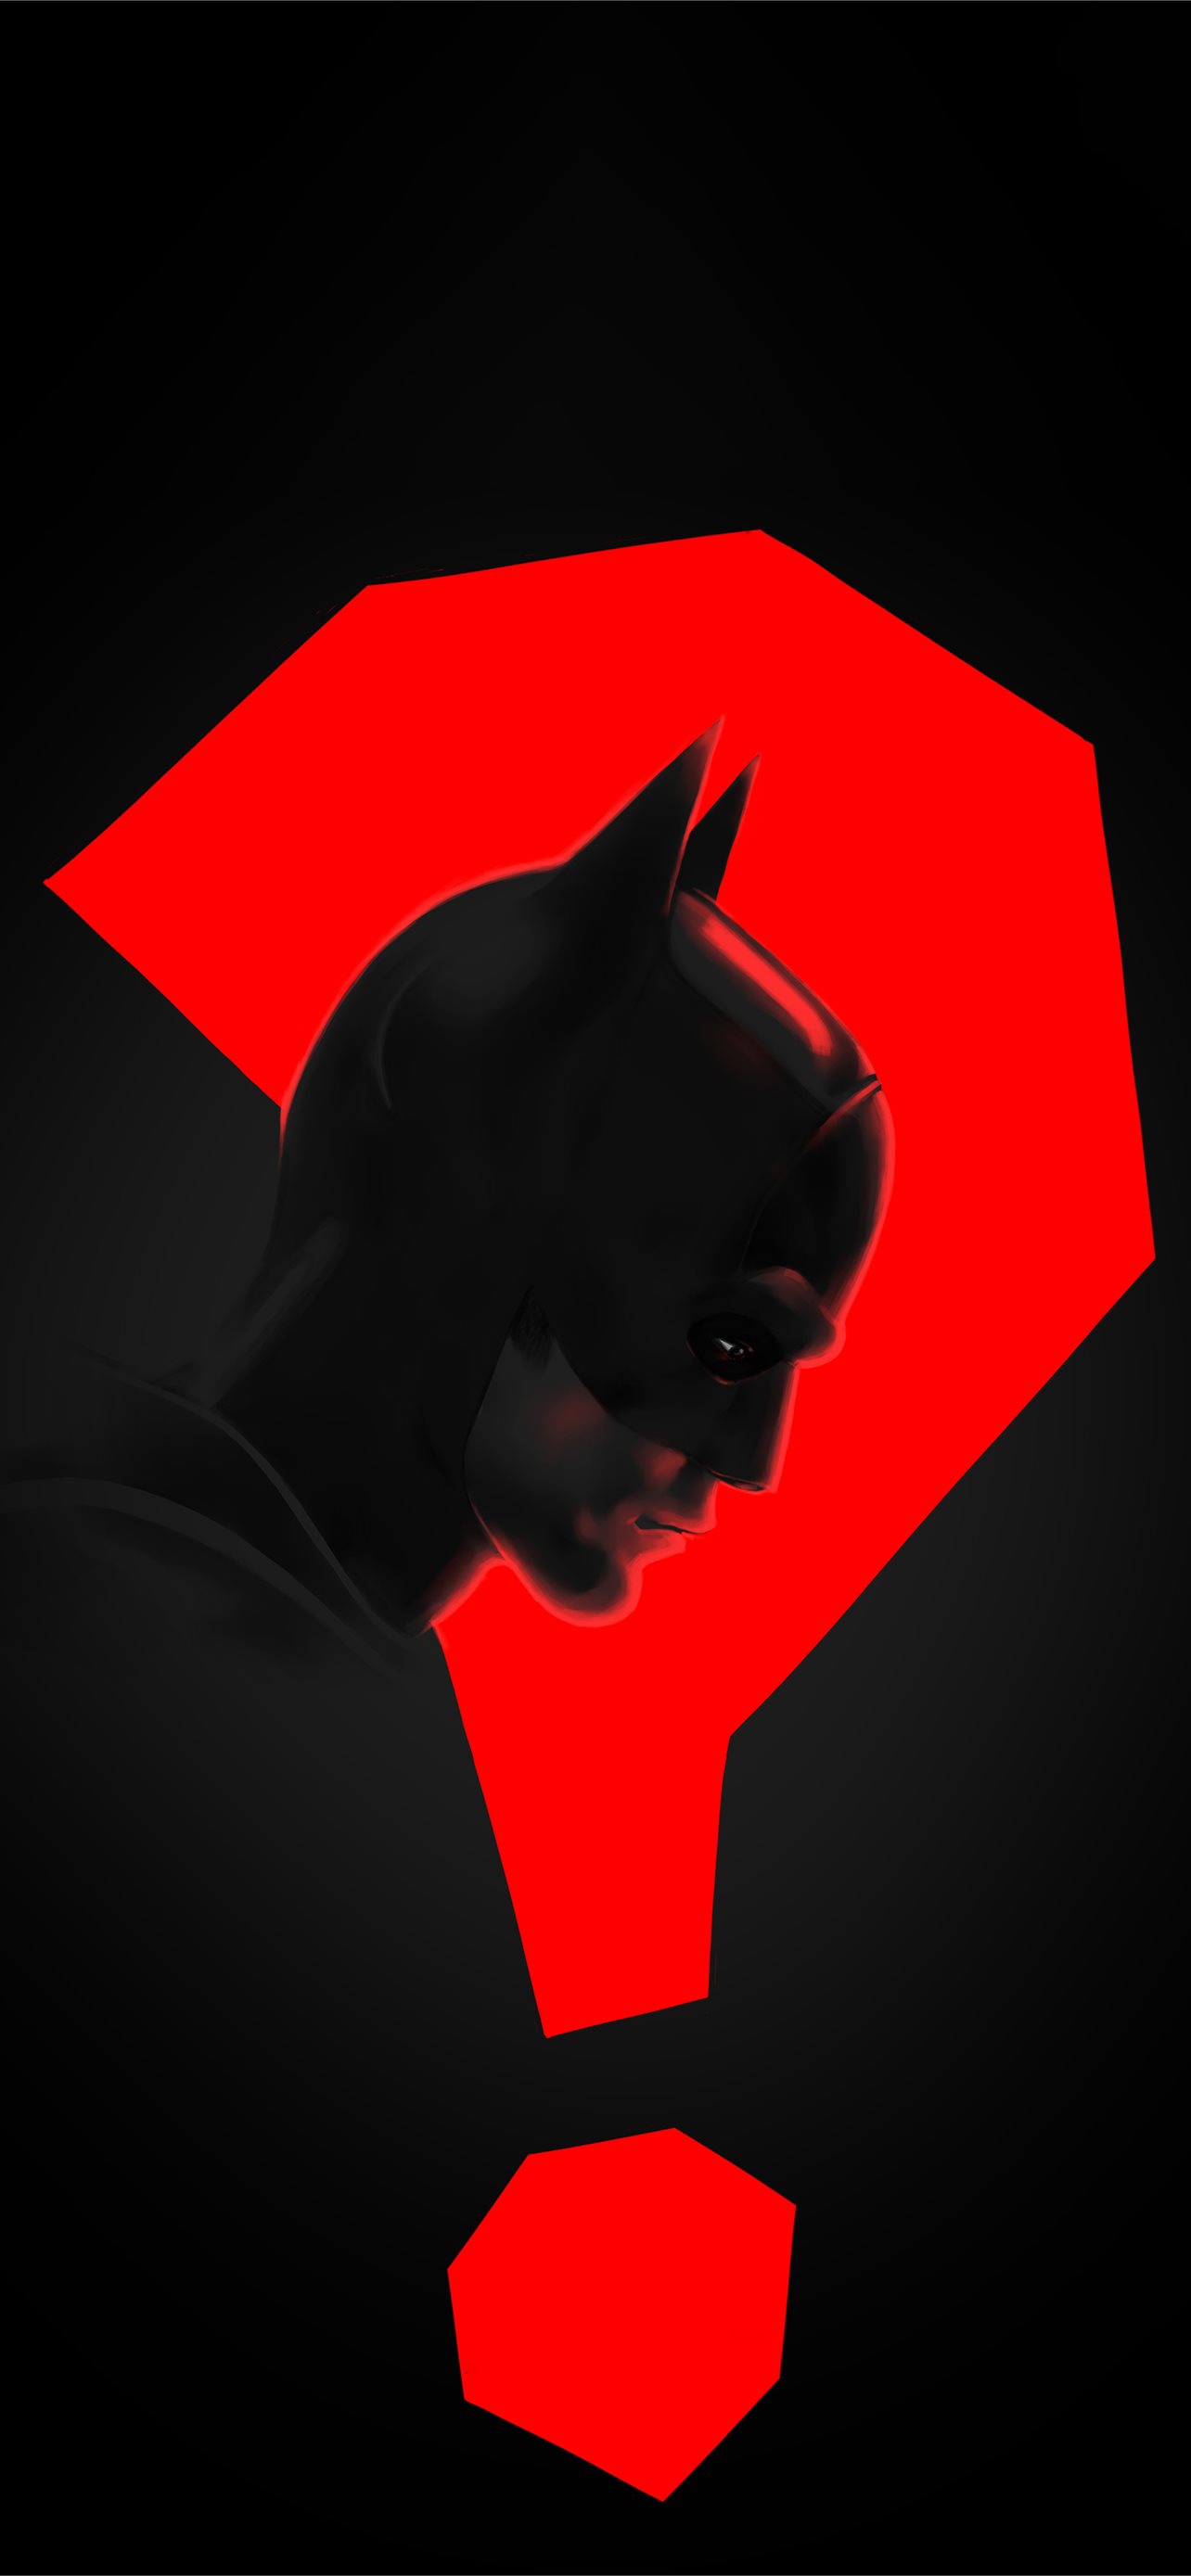 Batman Animated Art iPhone Wallpaper | Superhero wallpaper, Batman cartoon,  Cartoon wallpaper